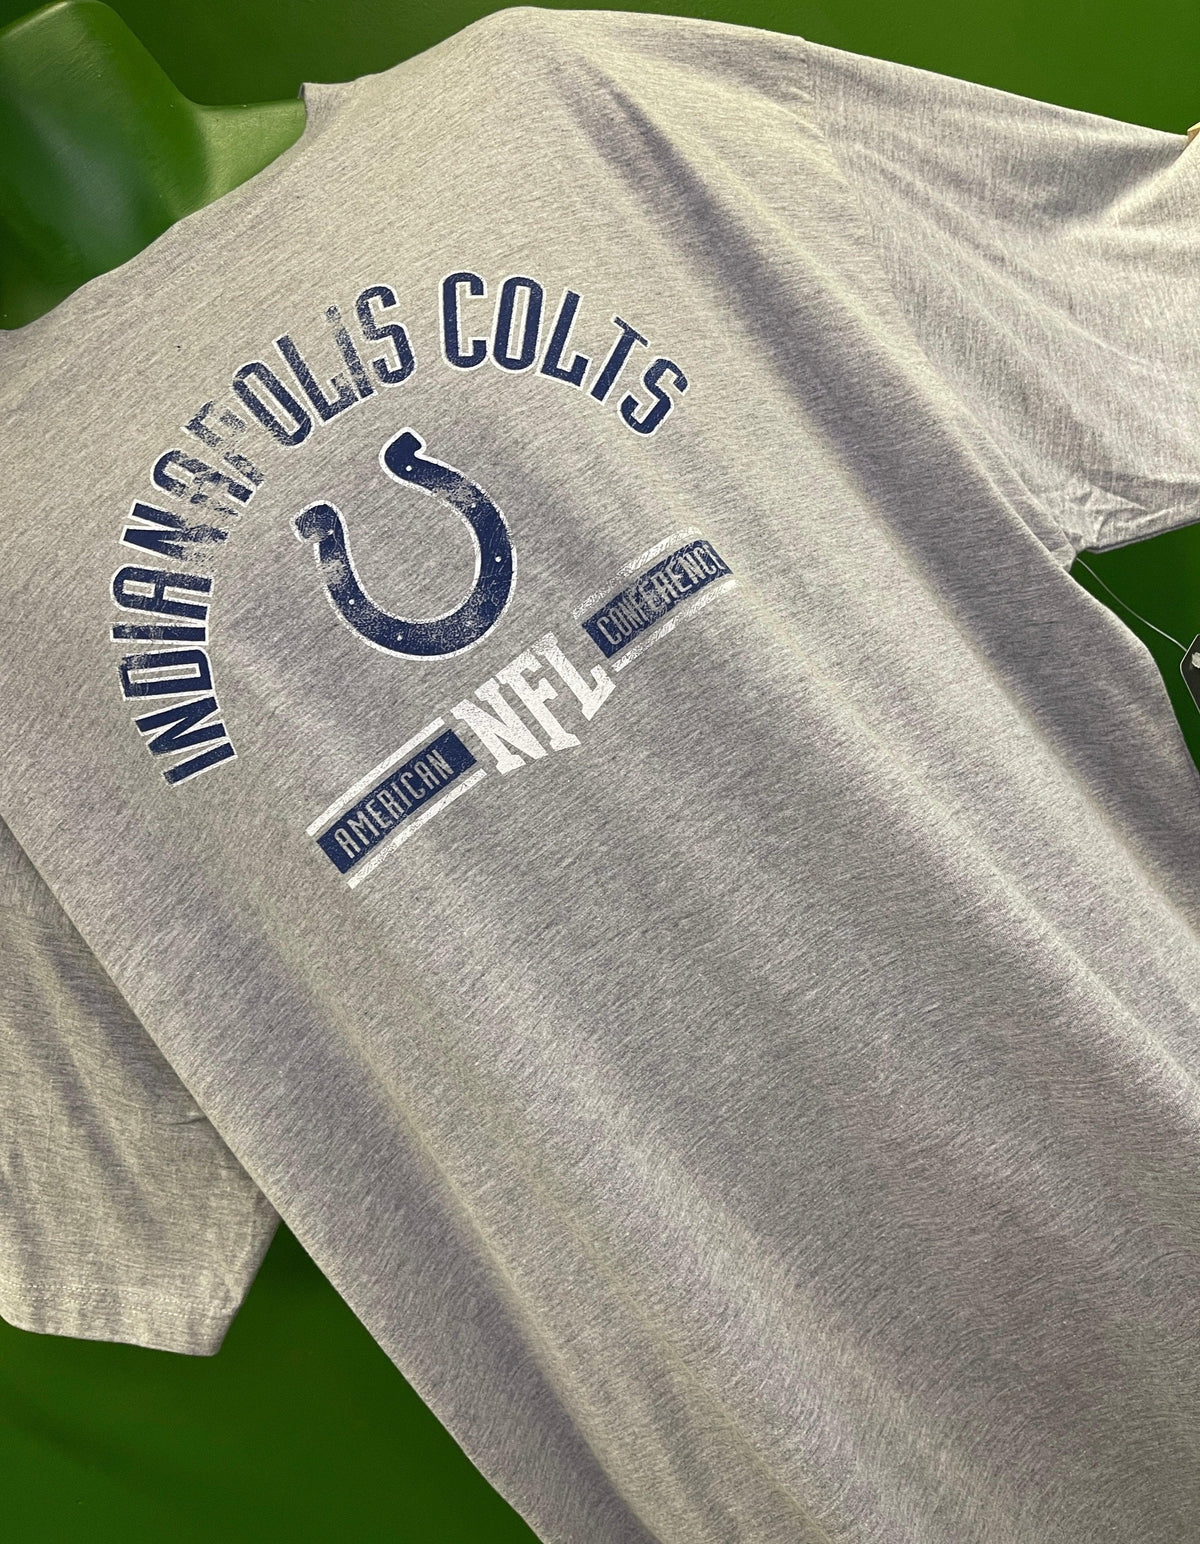 NFL Indianapolis Colts Heathered Grey Stadium T-Shirt Men's 2X-BIG NWT